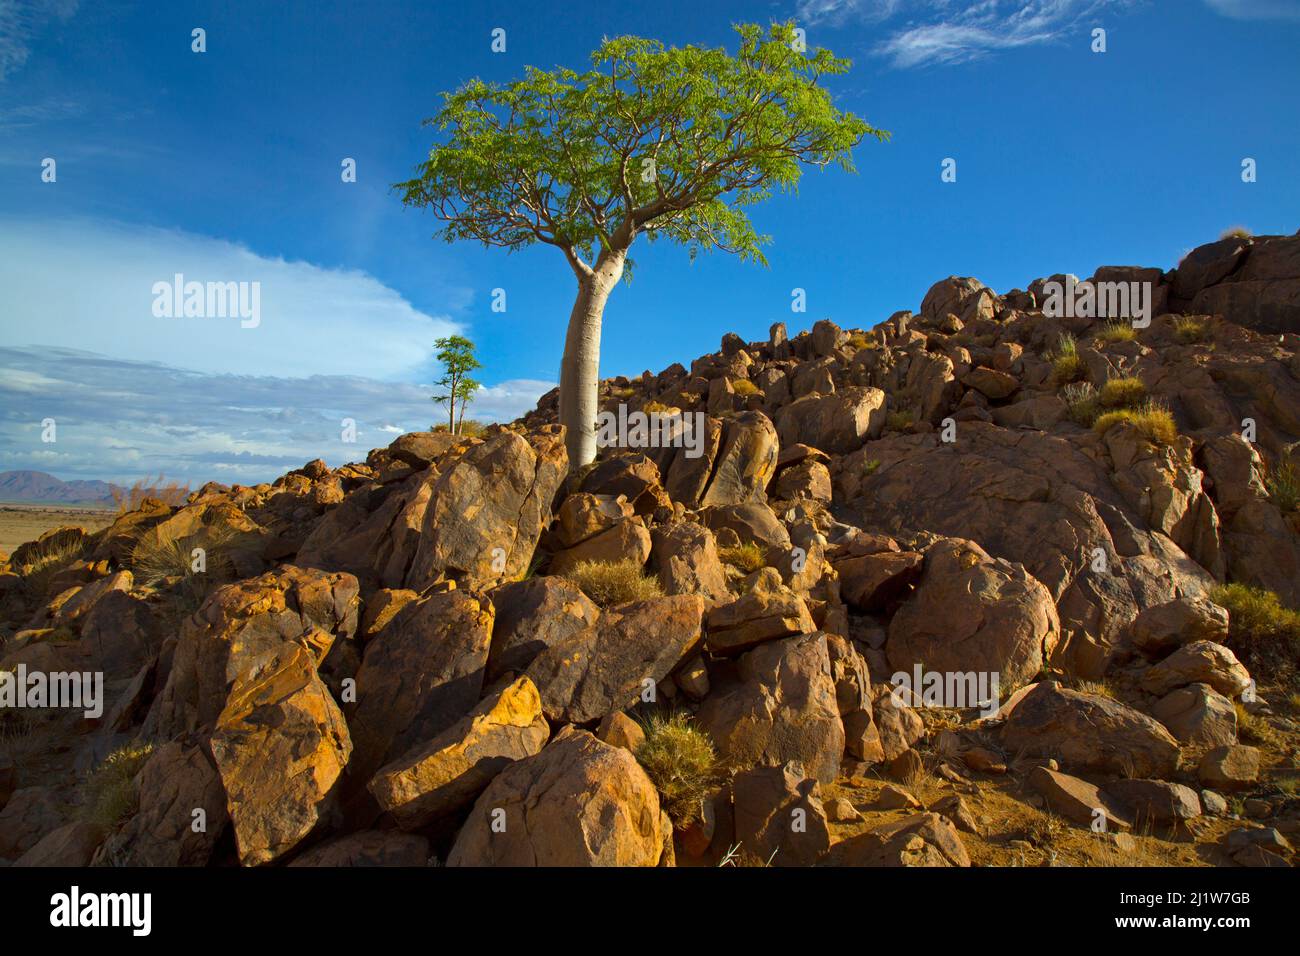 Five-lobed sterculia (Sterculia quinqueloba) tree growing on rocky hillside, Namibia Stock Photo